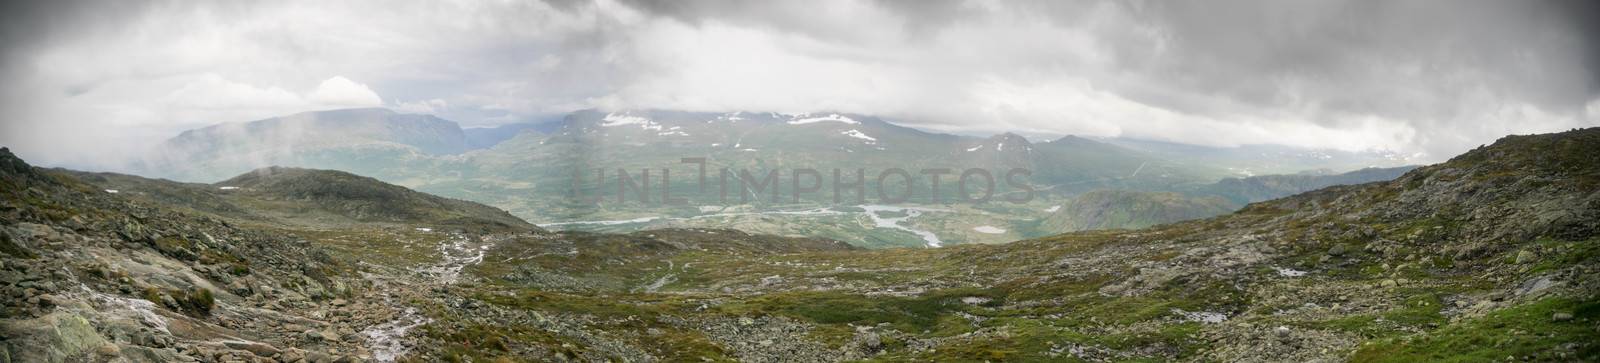 Mountain hiking in Norway by javax